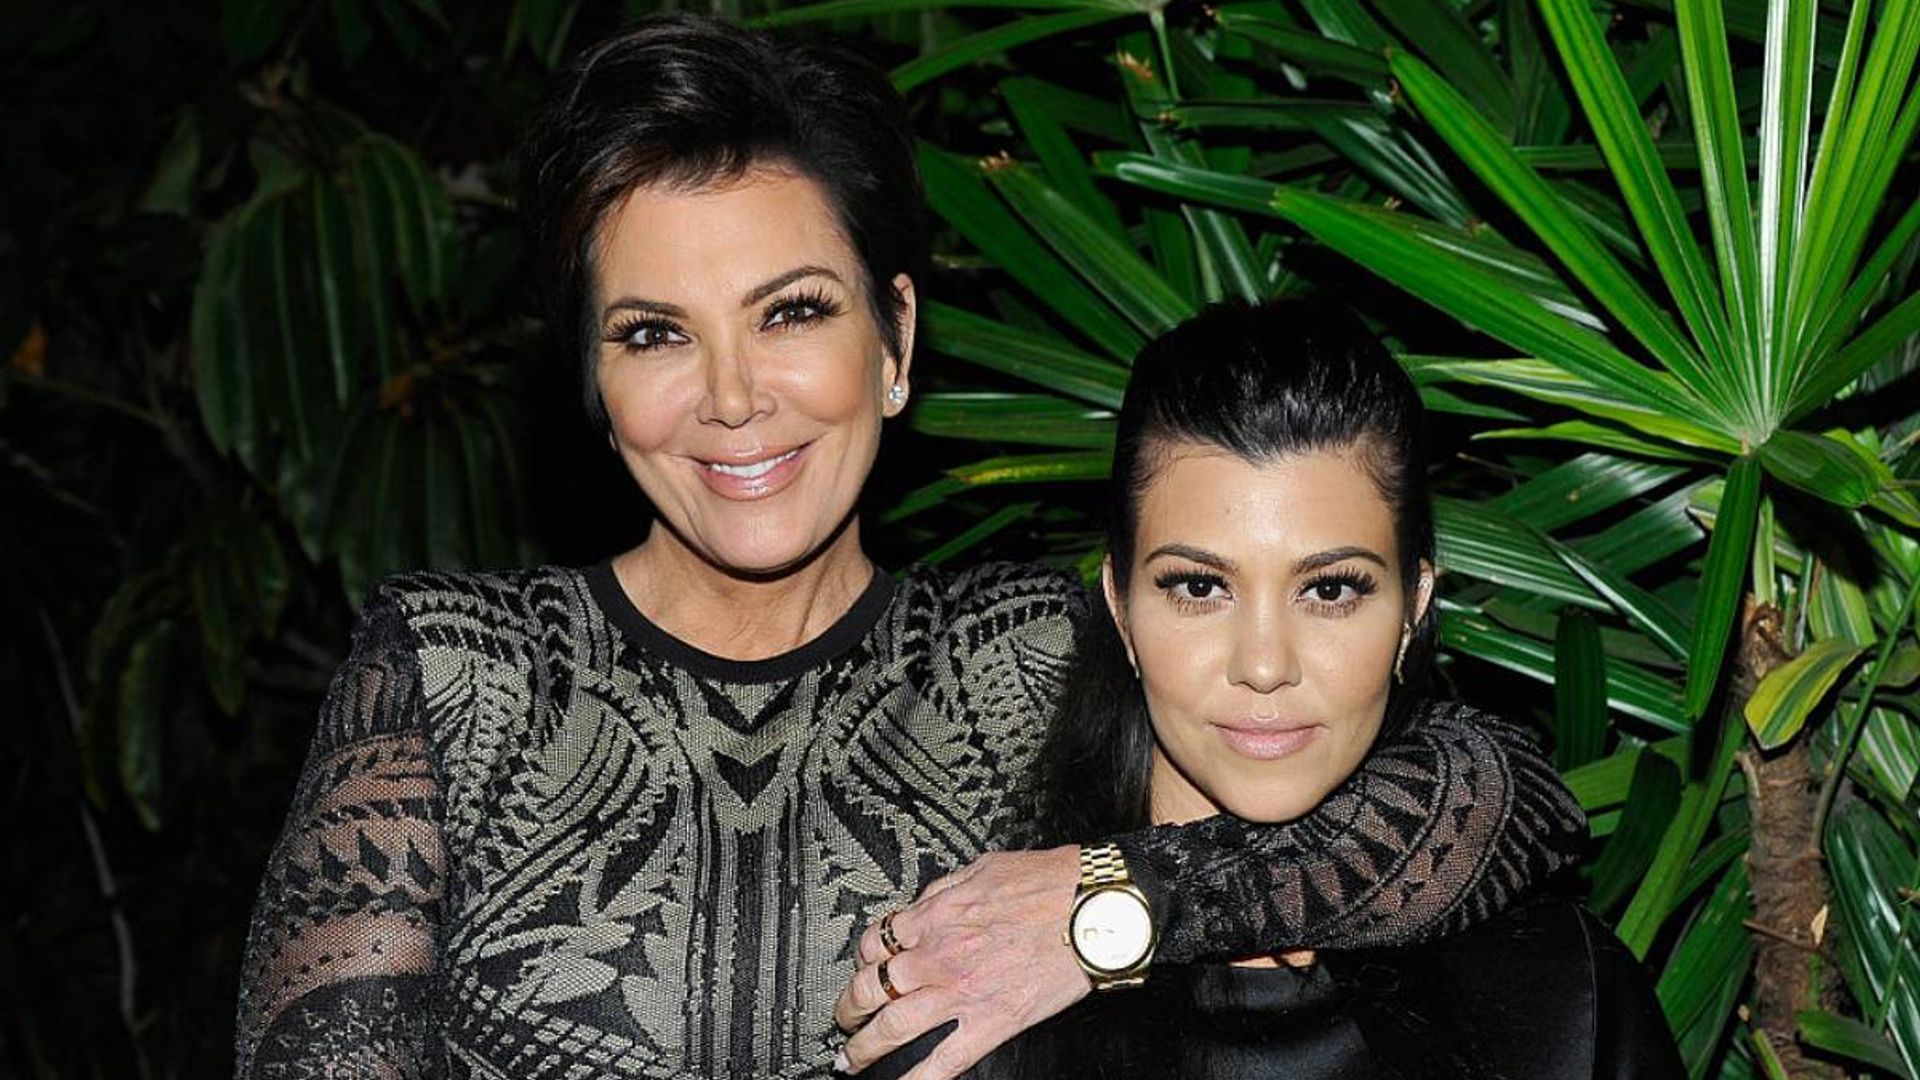 Kris Jenner is identical to daughter Kourtney Kardashian in filter-free family photo